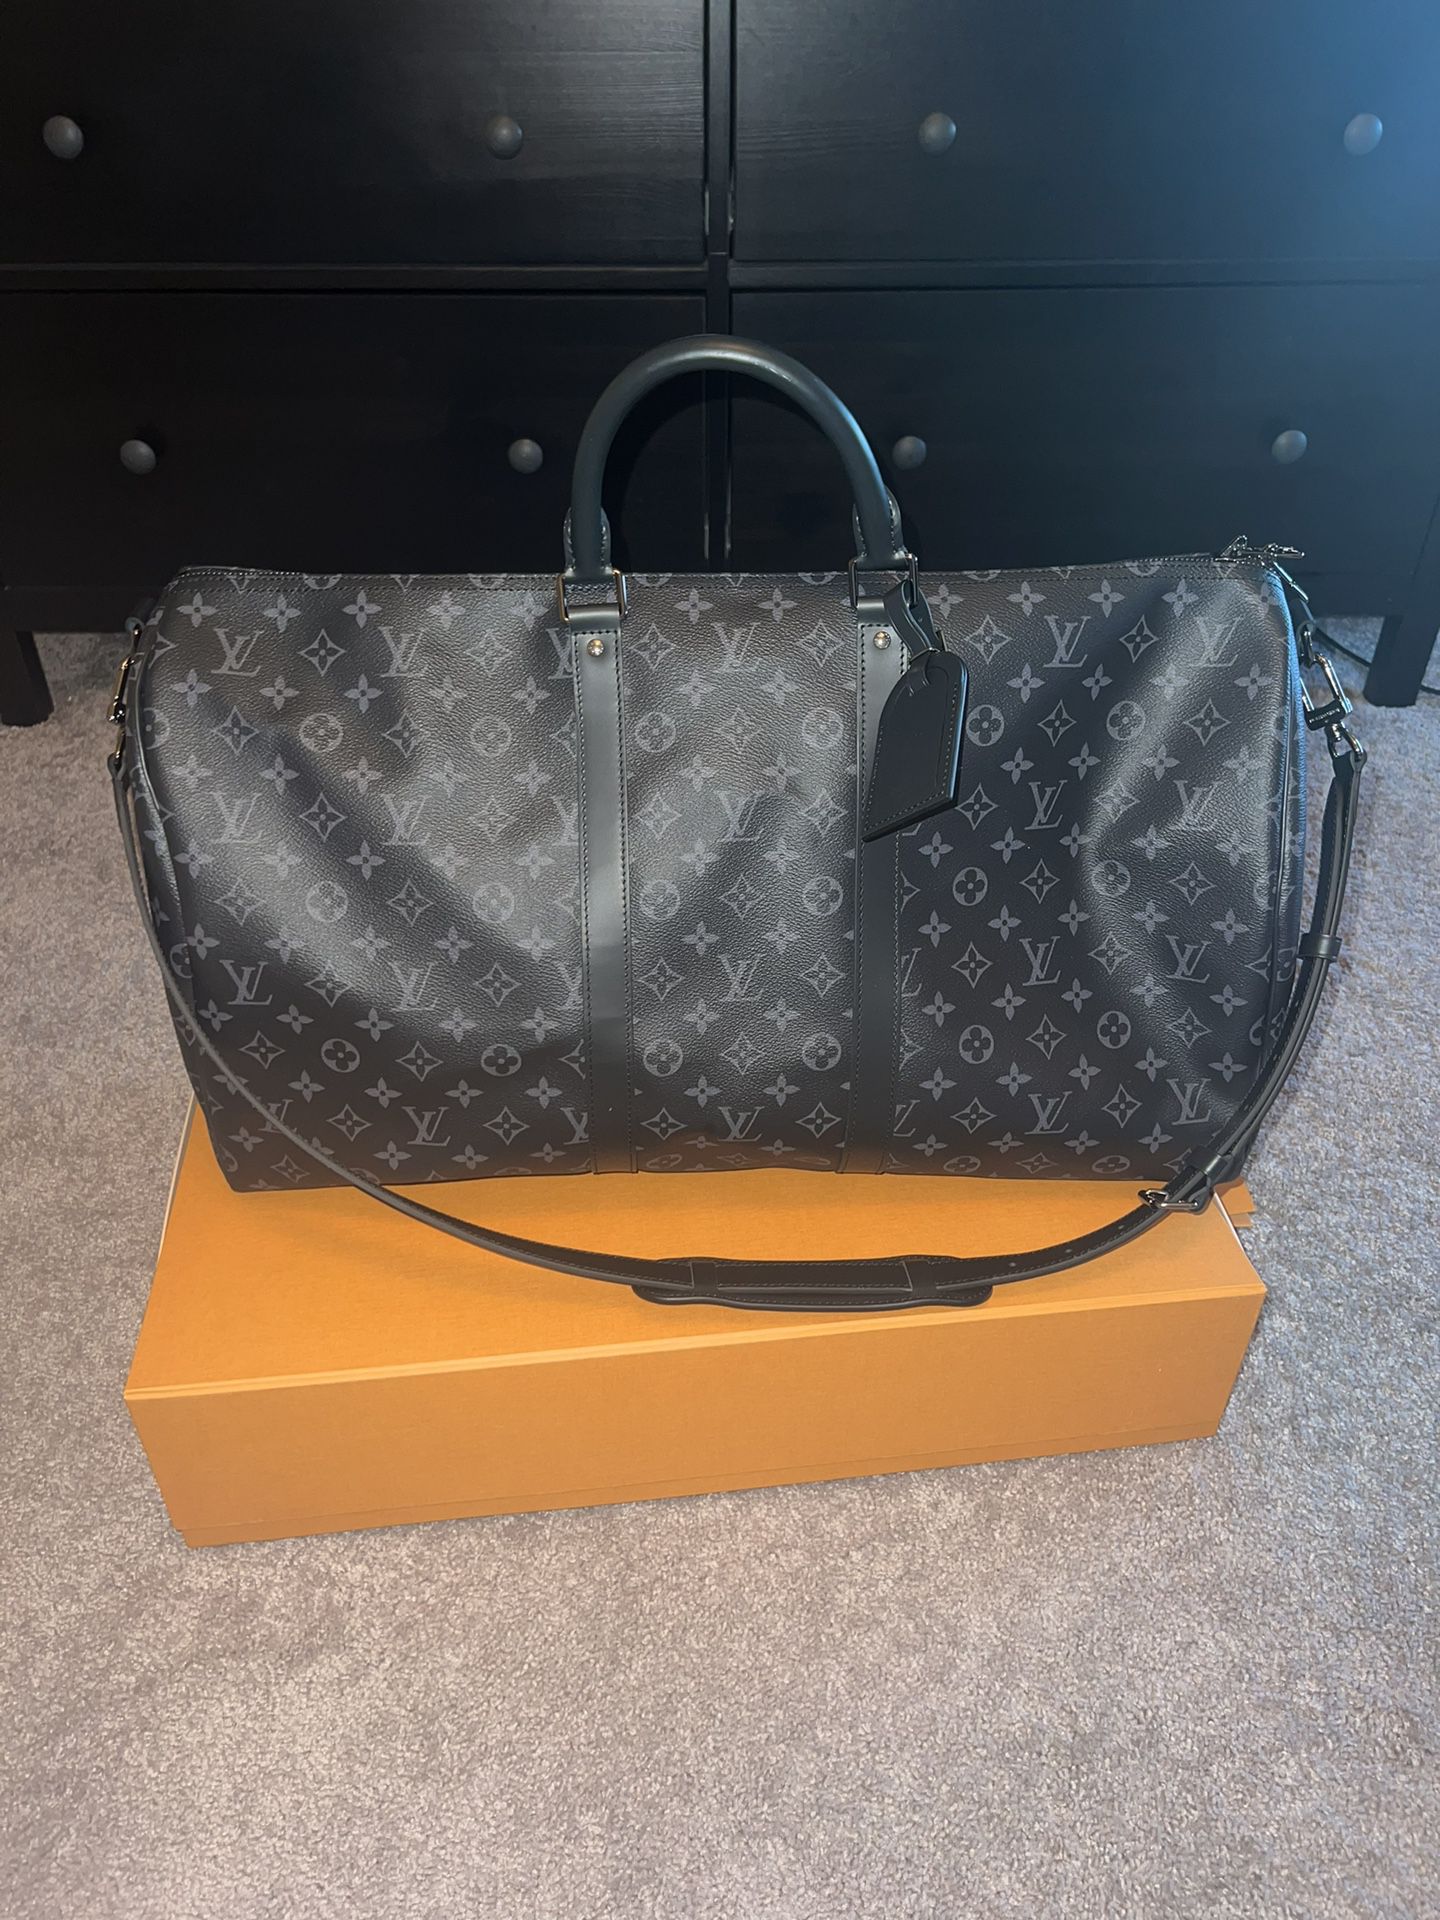 Louis Vuitton Duffle Bag for Sale in Las Vegas, NV - OfferUp